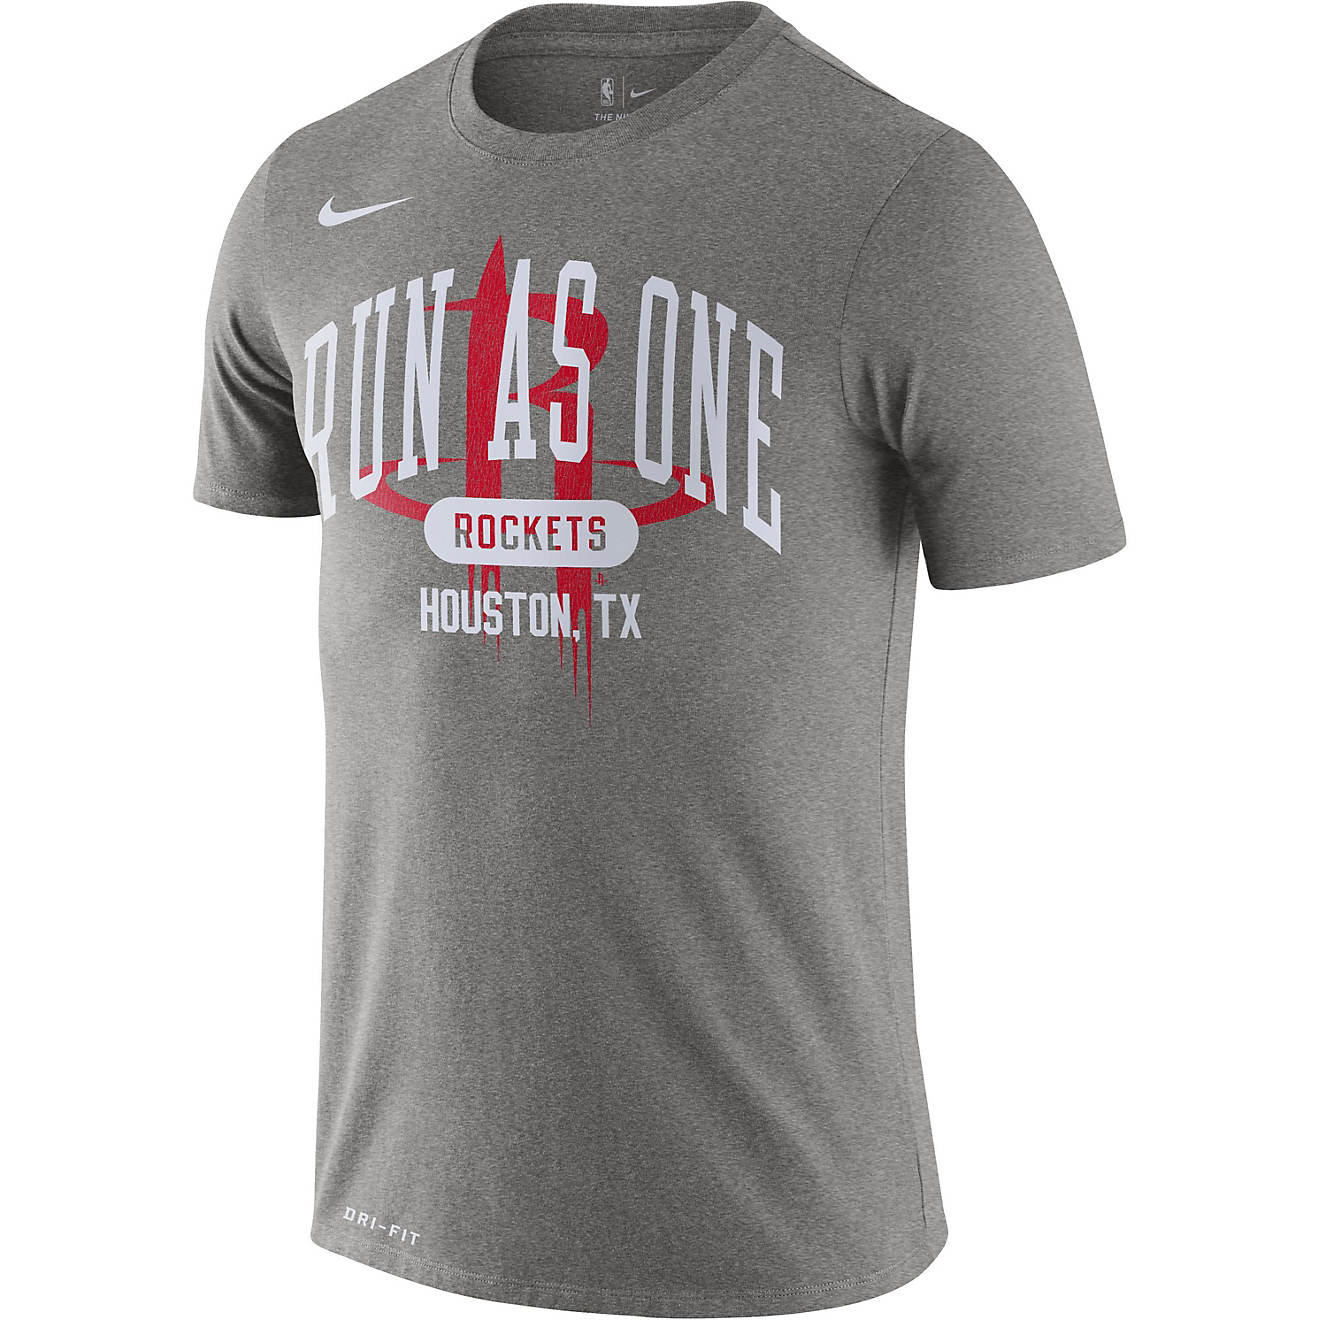 Nike Men's Houston Rockets Arch Mantra Dri-FIT T-shirt